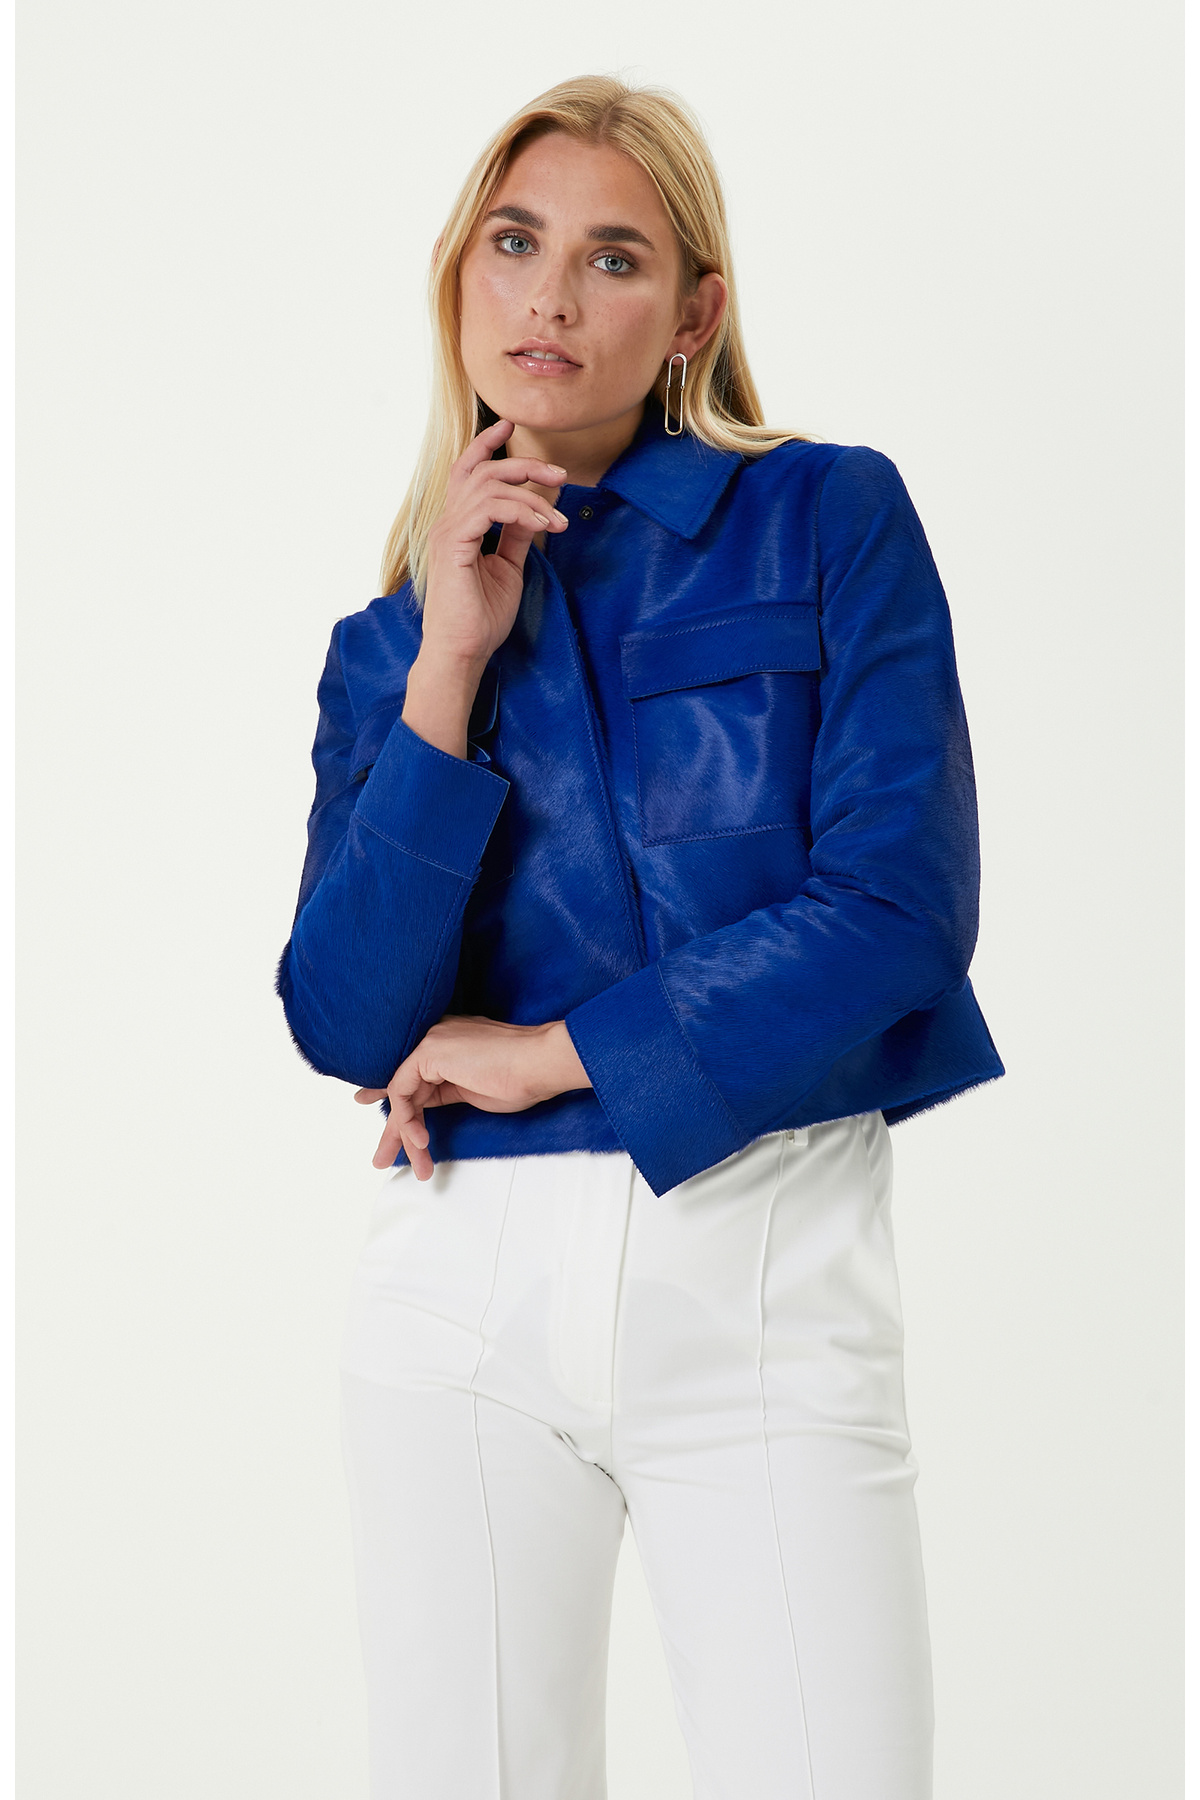 Кожаное пальто Saks с воротником рубашки Network, темно-синий